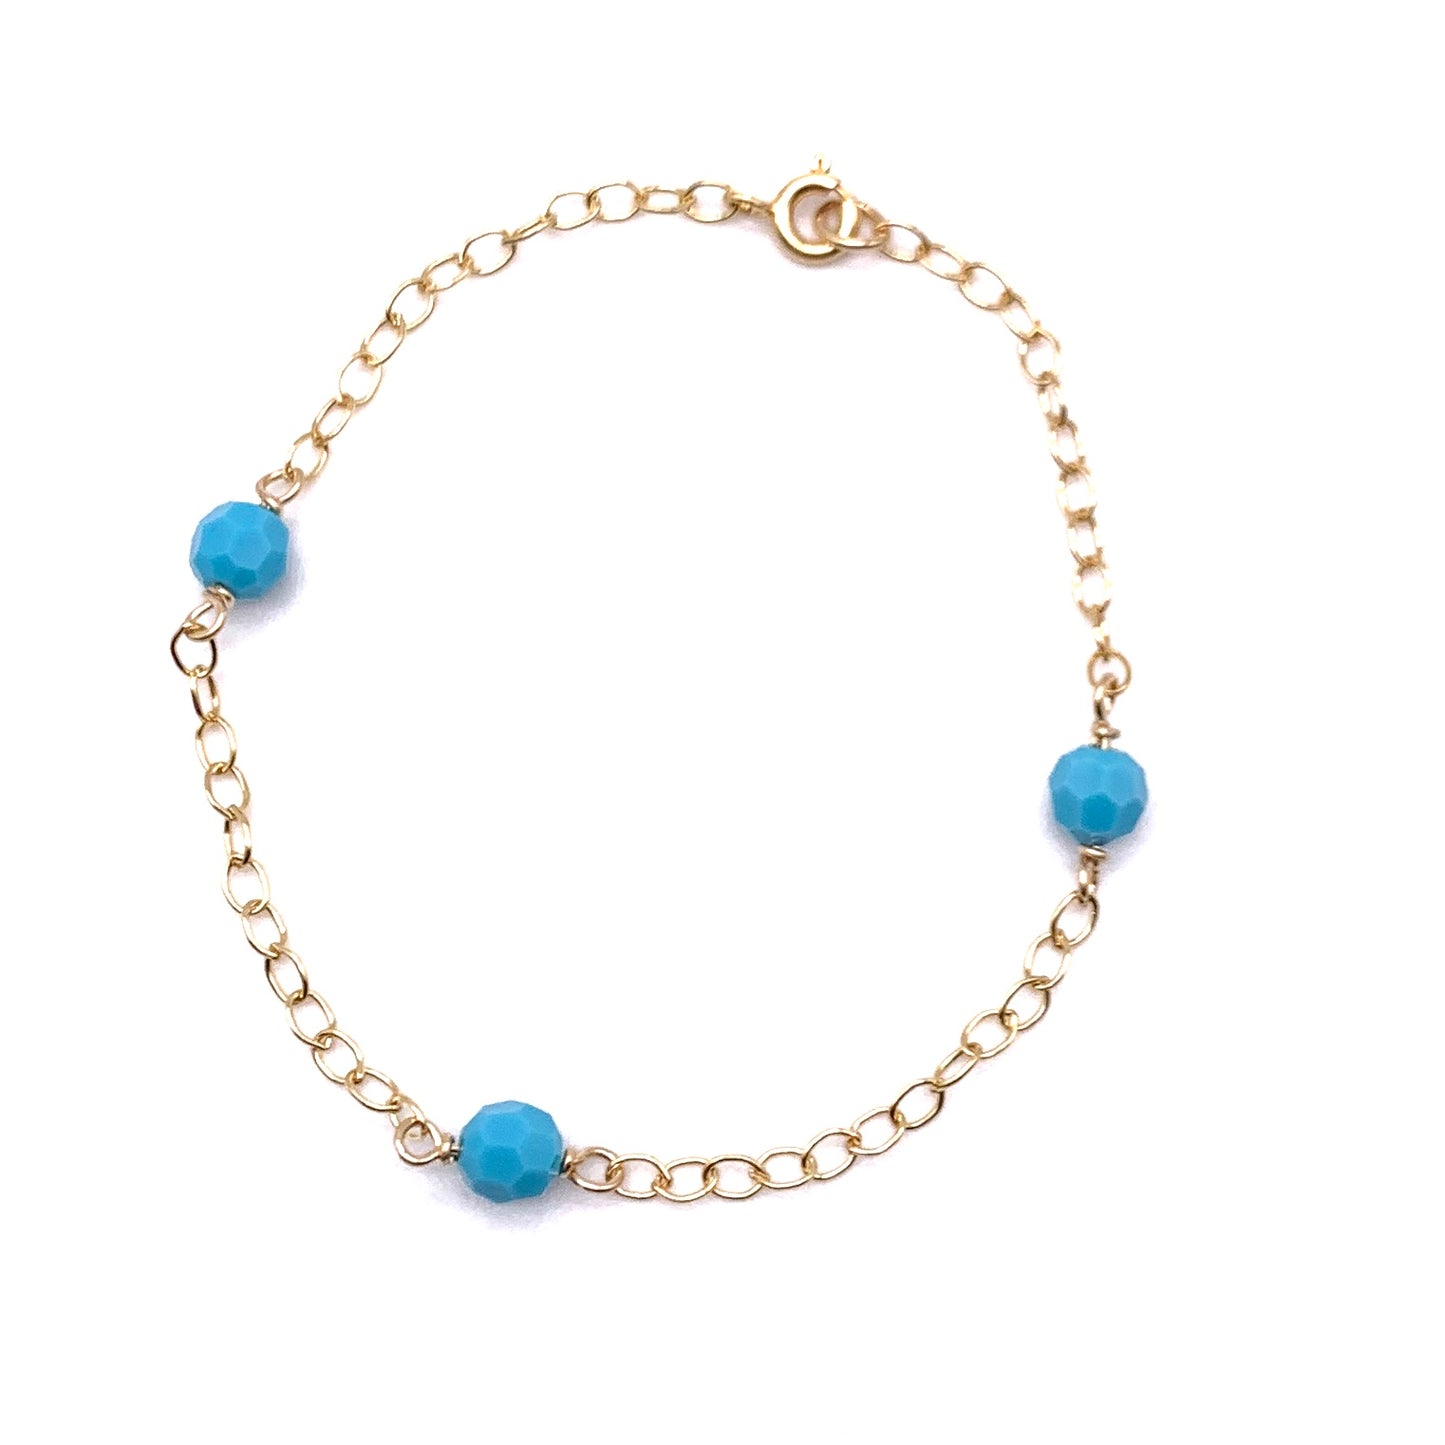 Gold-filled and Turquoise Swarovski Bead Bracelet